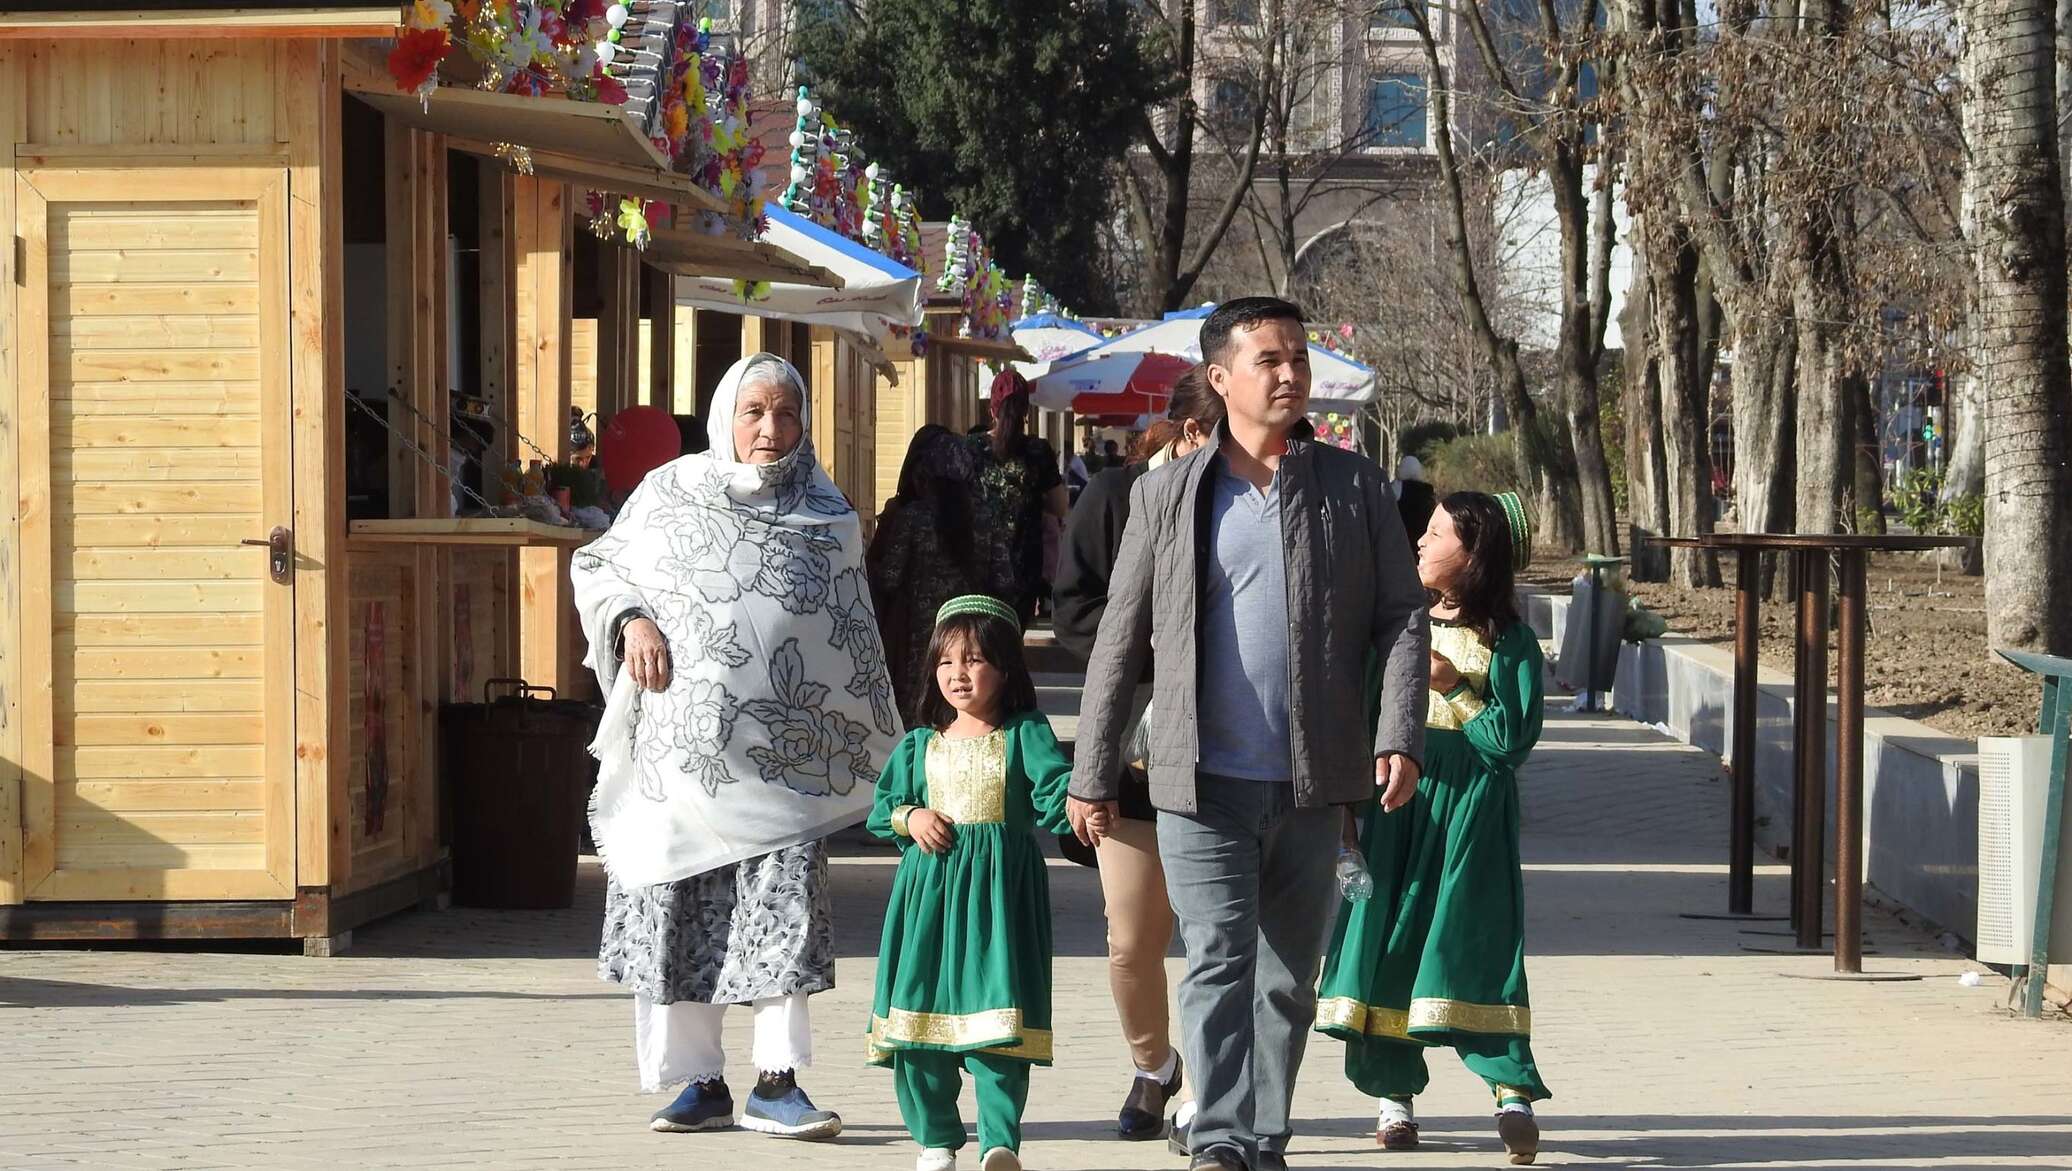 Таджикистан сегодня как живут